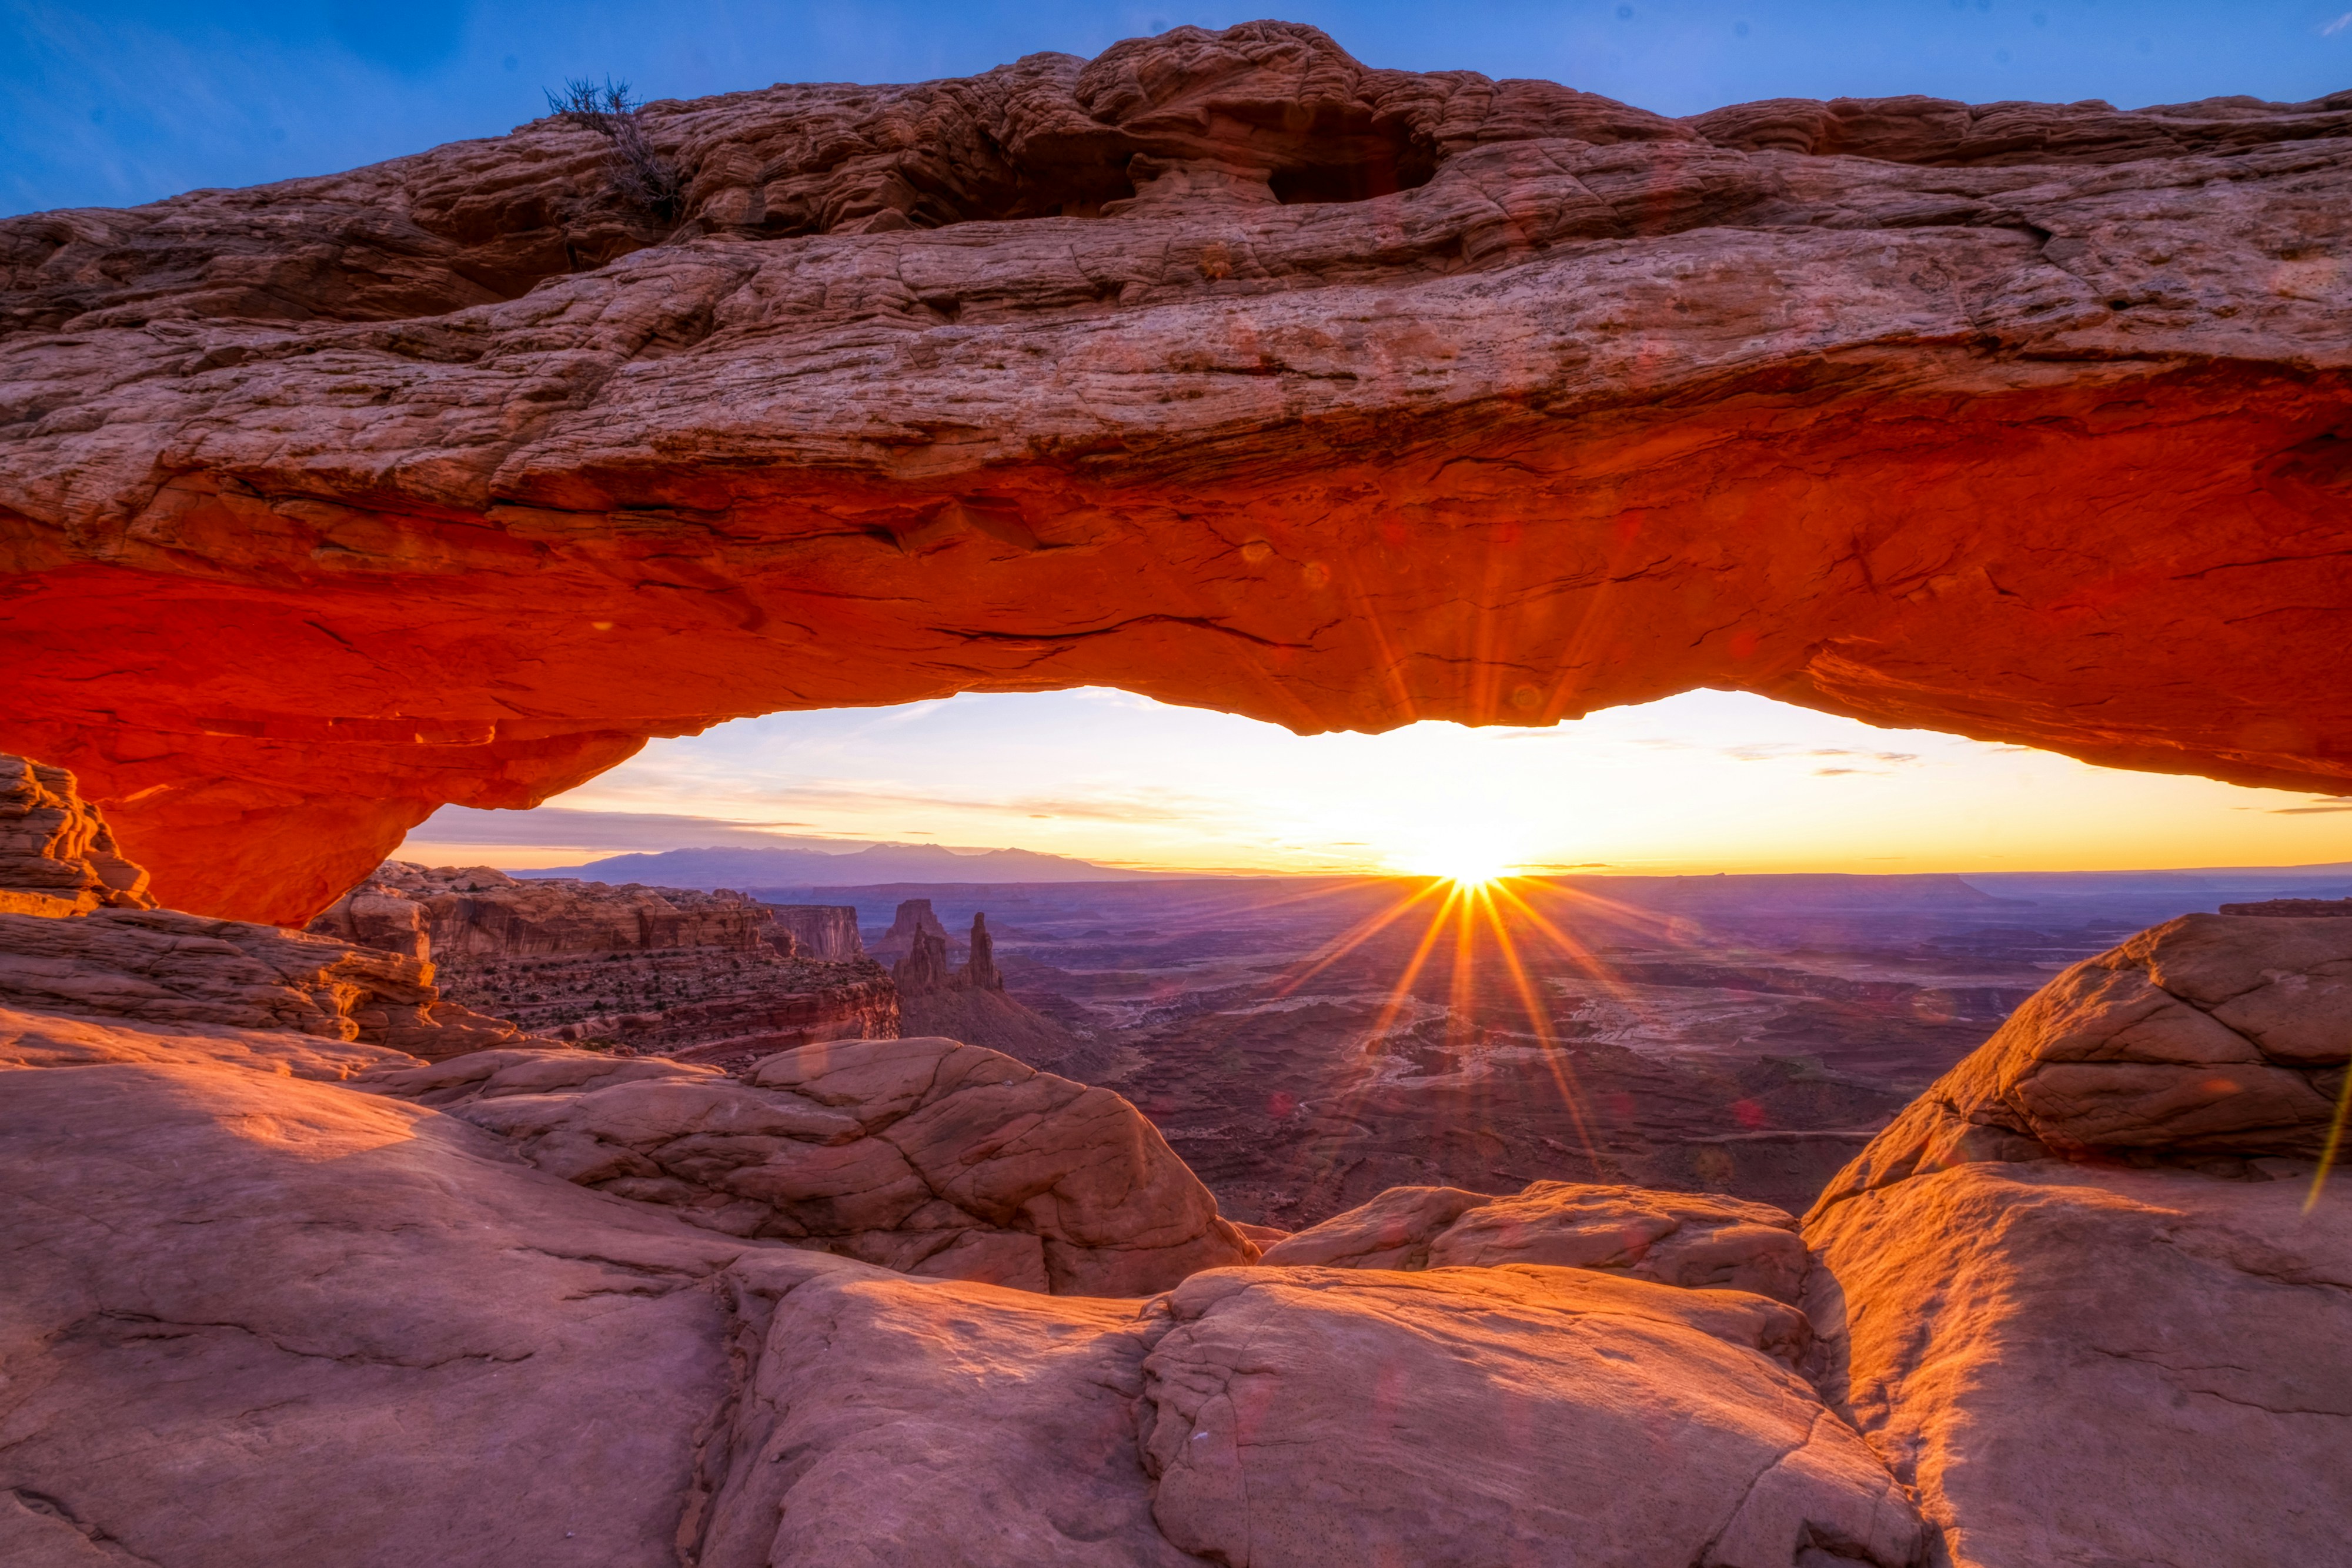 A sunrise seen through an arch in the desert.